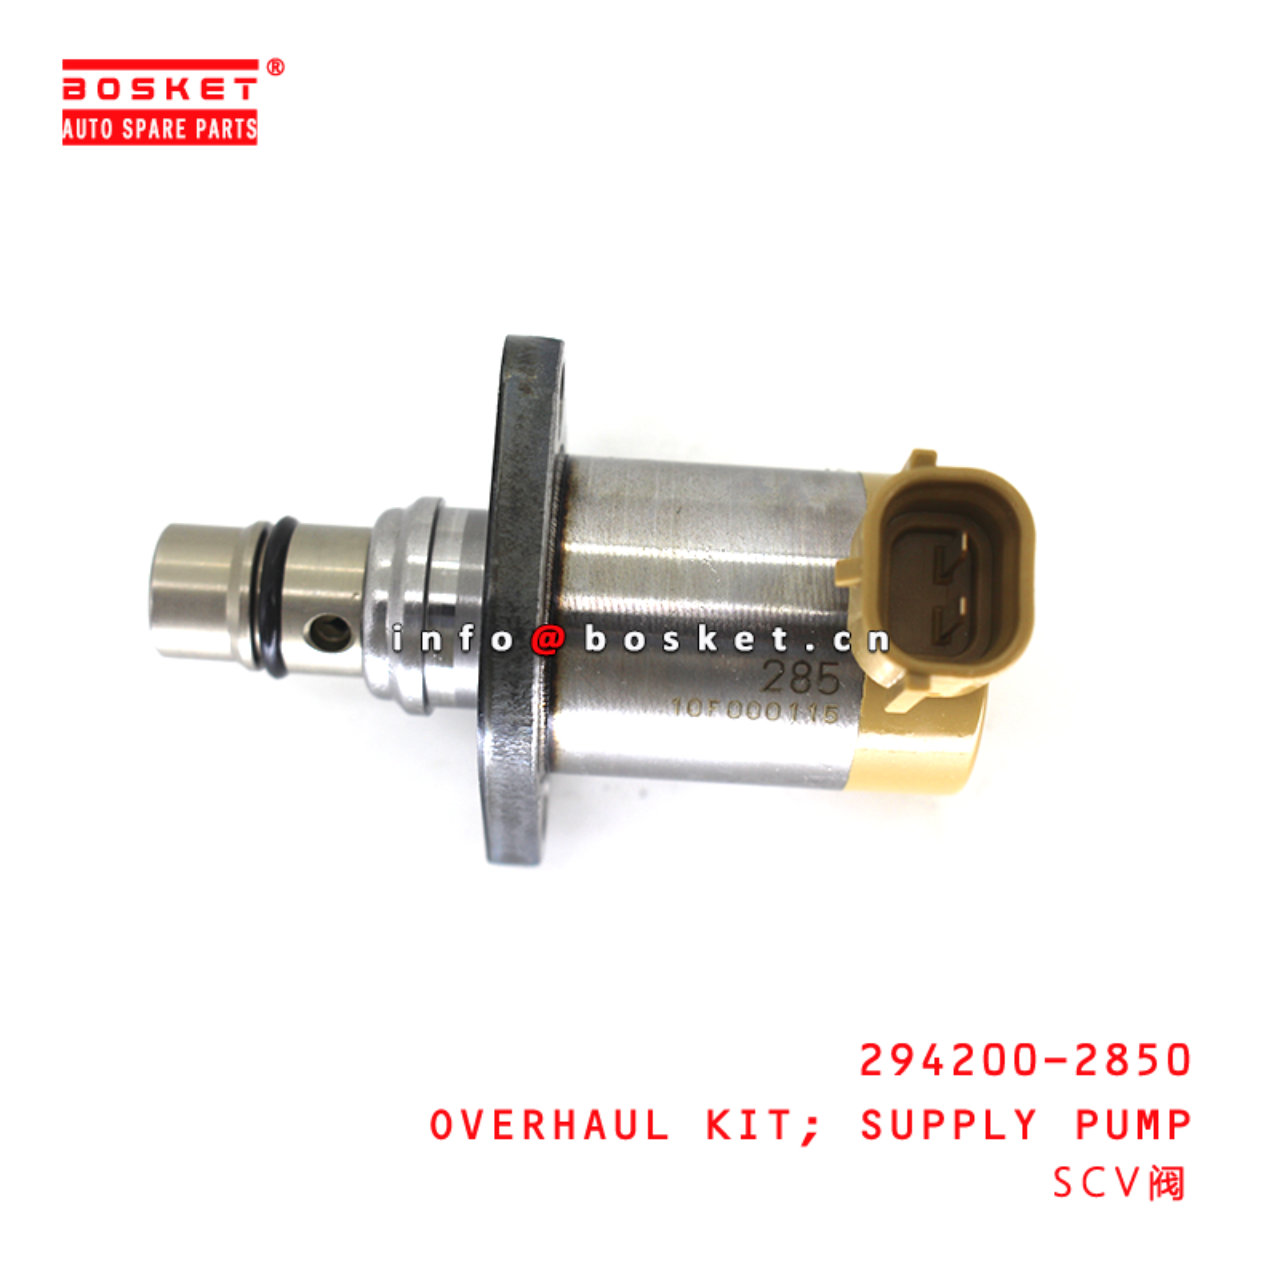 294200-2850 Supply Pump Overhaul Kit Suitable for ISUZU HINO300